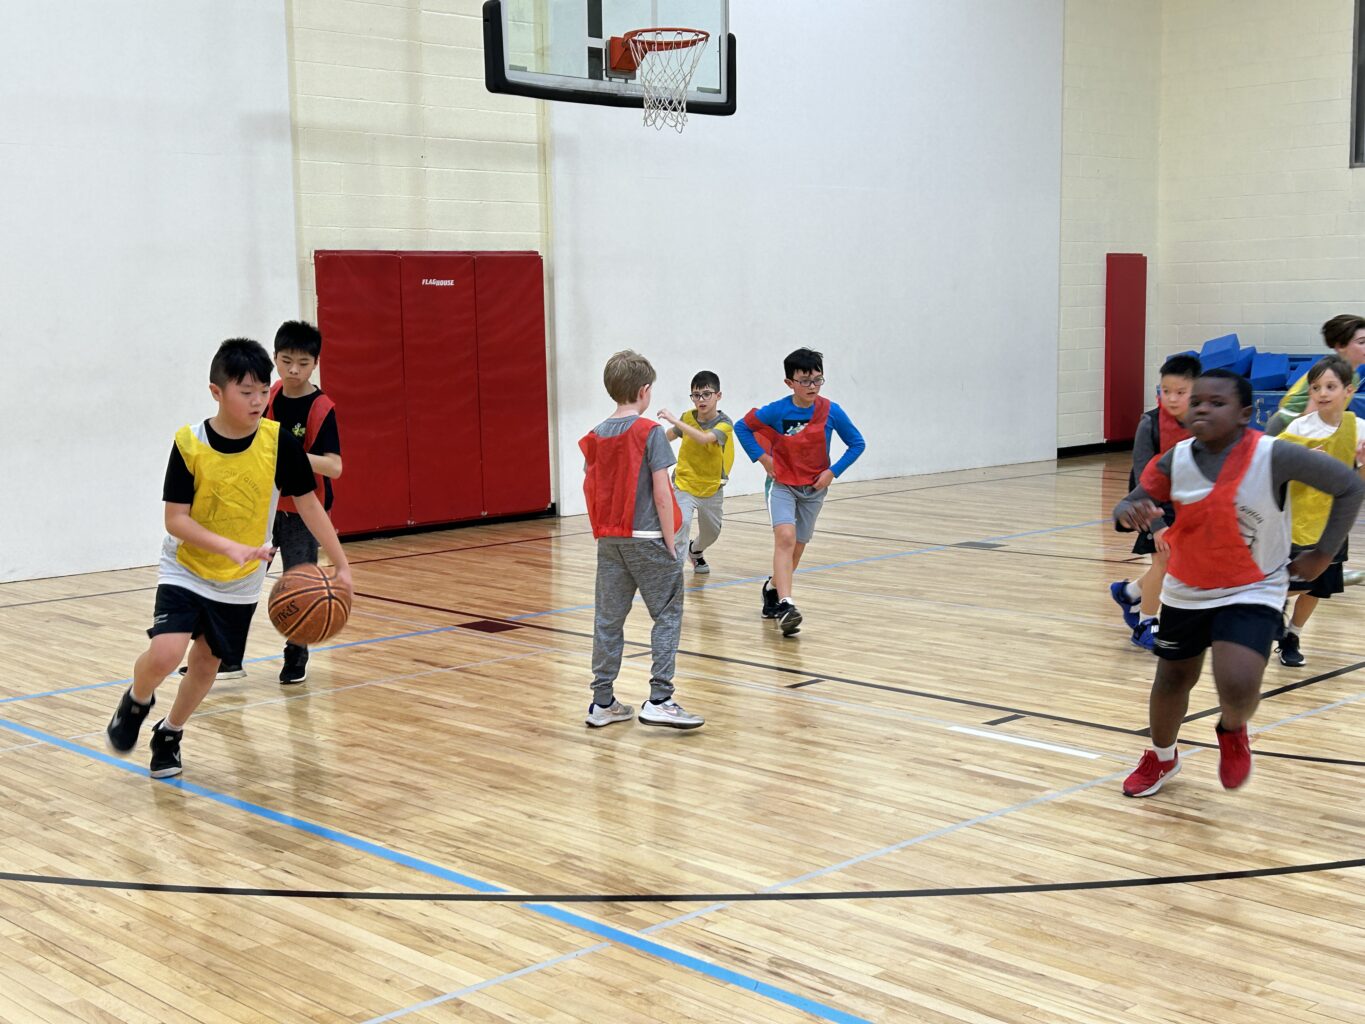 Children's Sports Classes in Little Neck, Queens - Commonpoint Queens